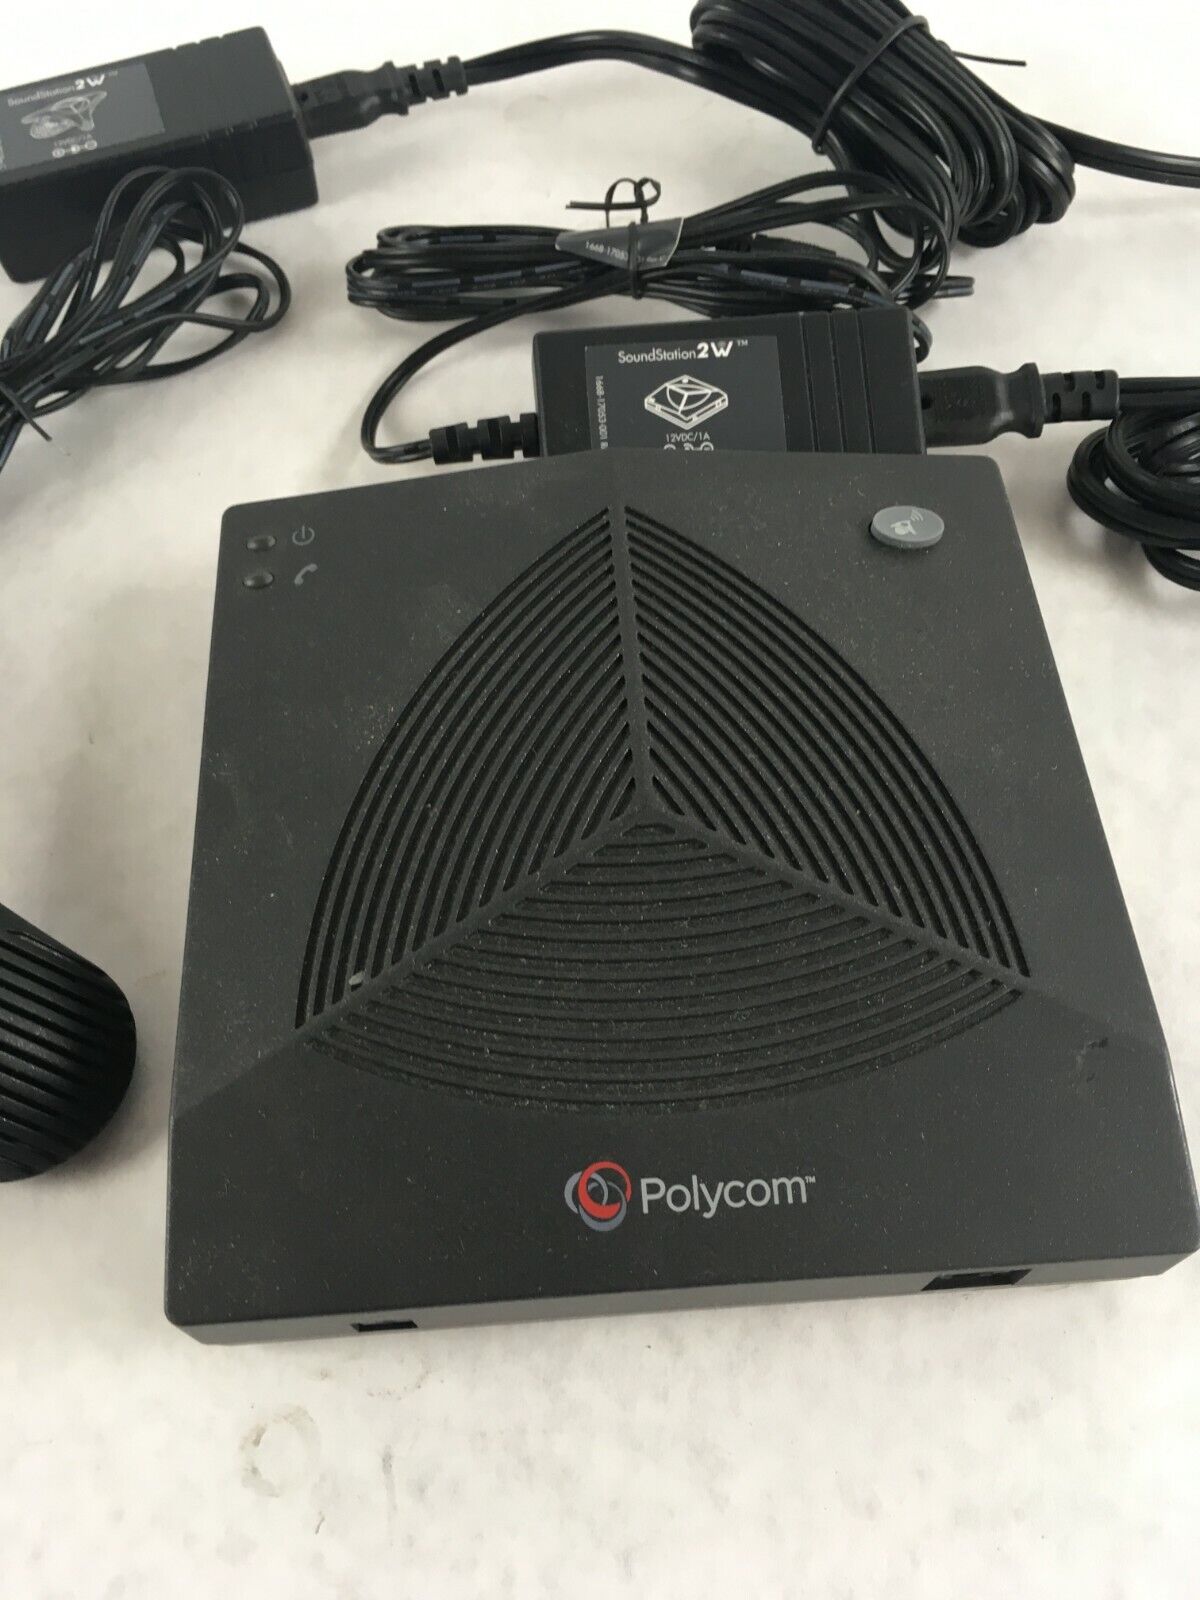 Polycom SoundStation 2W w/ Base and AC Adapters 2201-67880-160  2201-67810-160